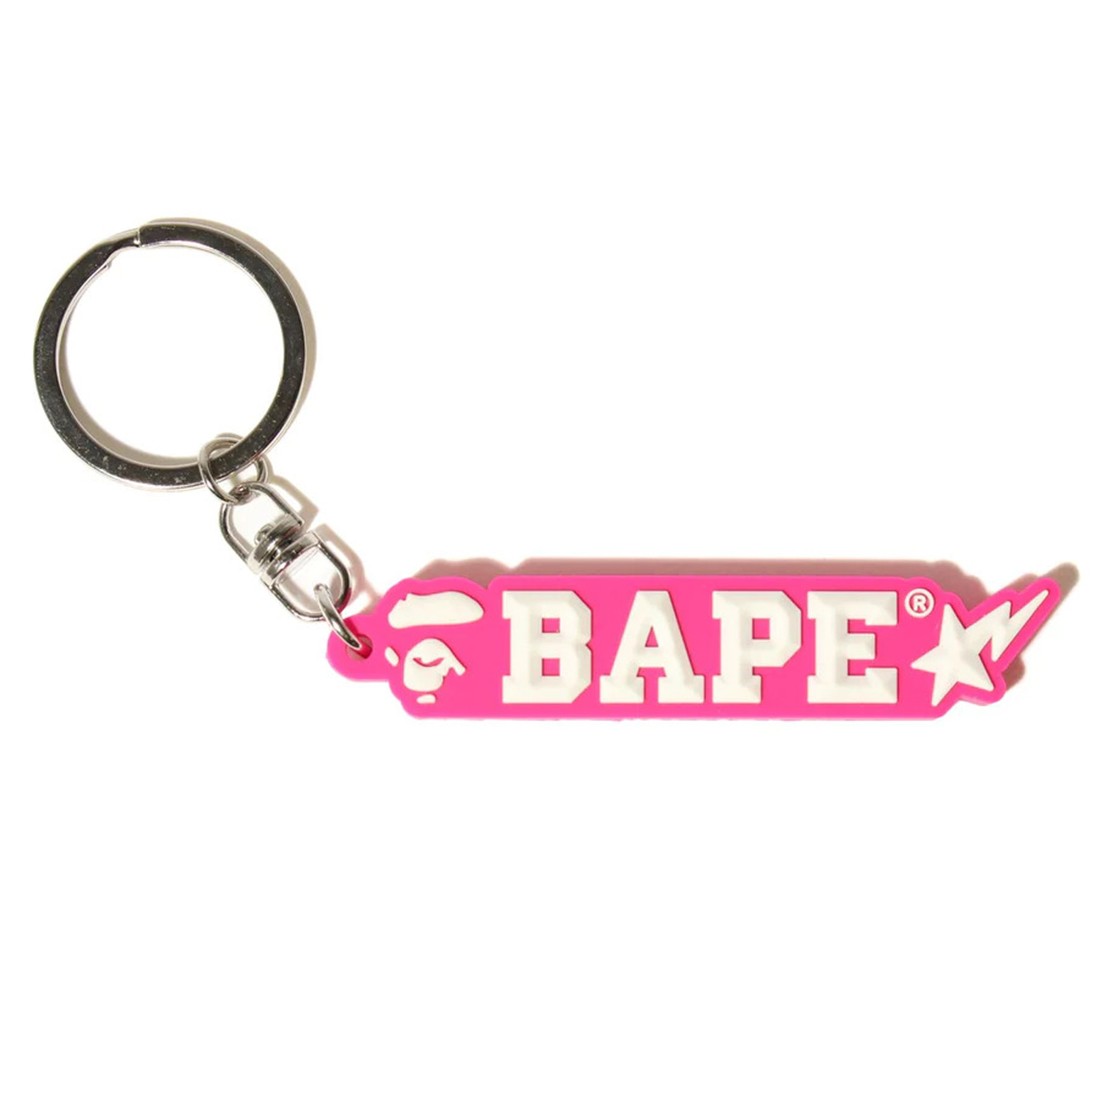 A Bathing Ape Bape Rubber Keychain (pink)